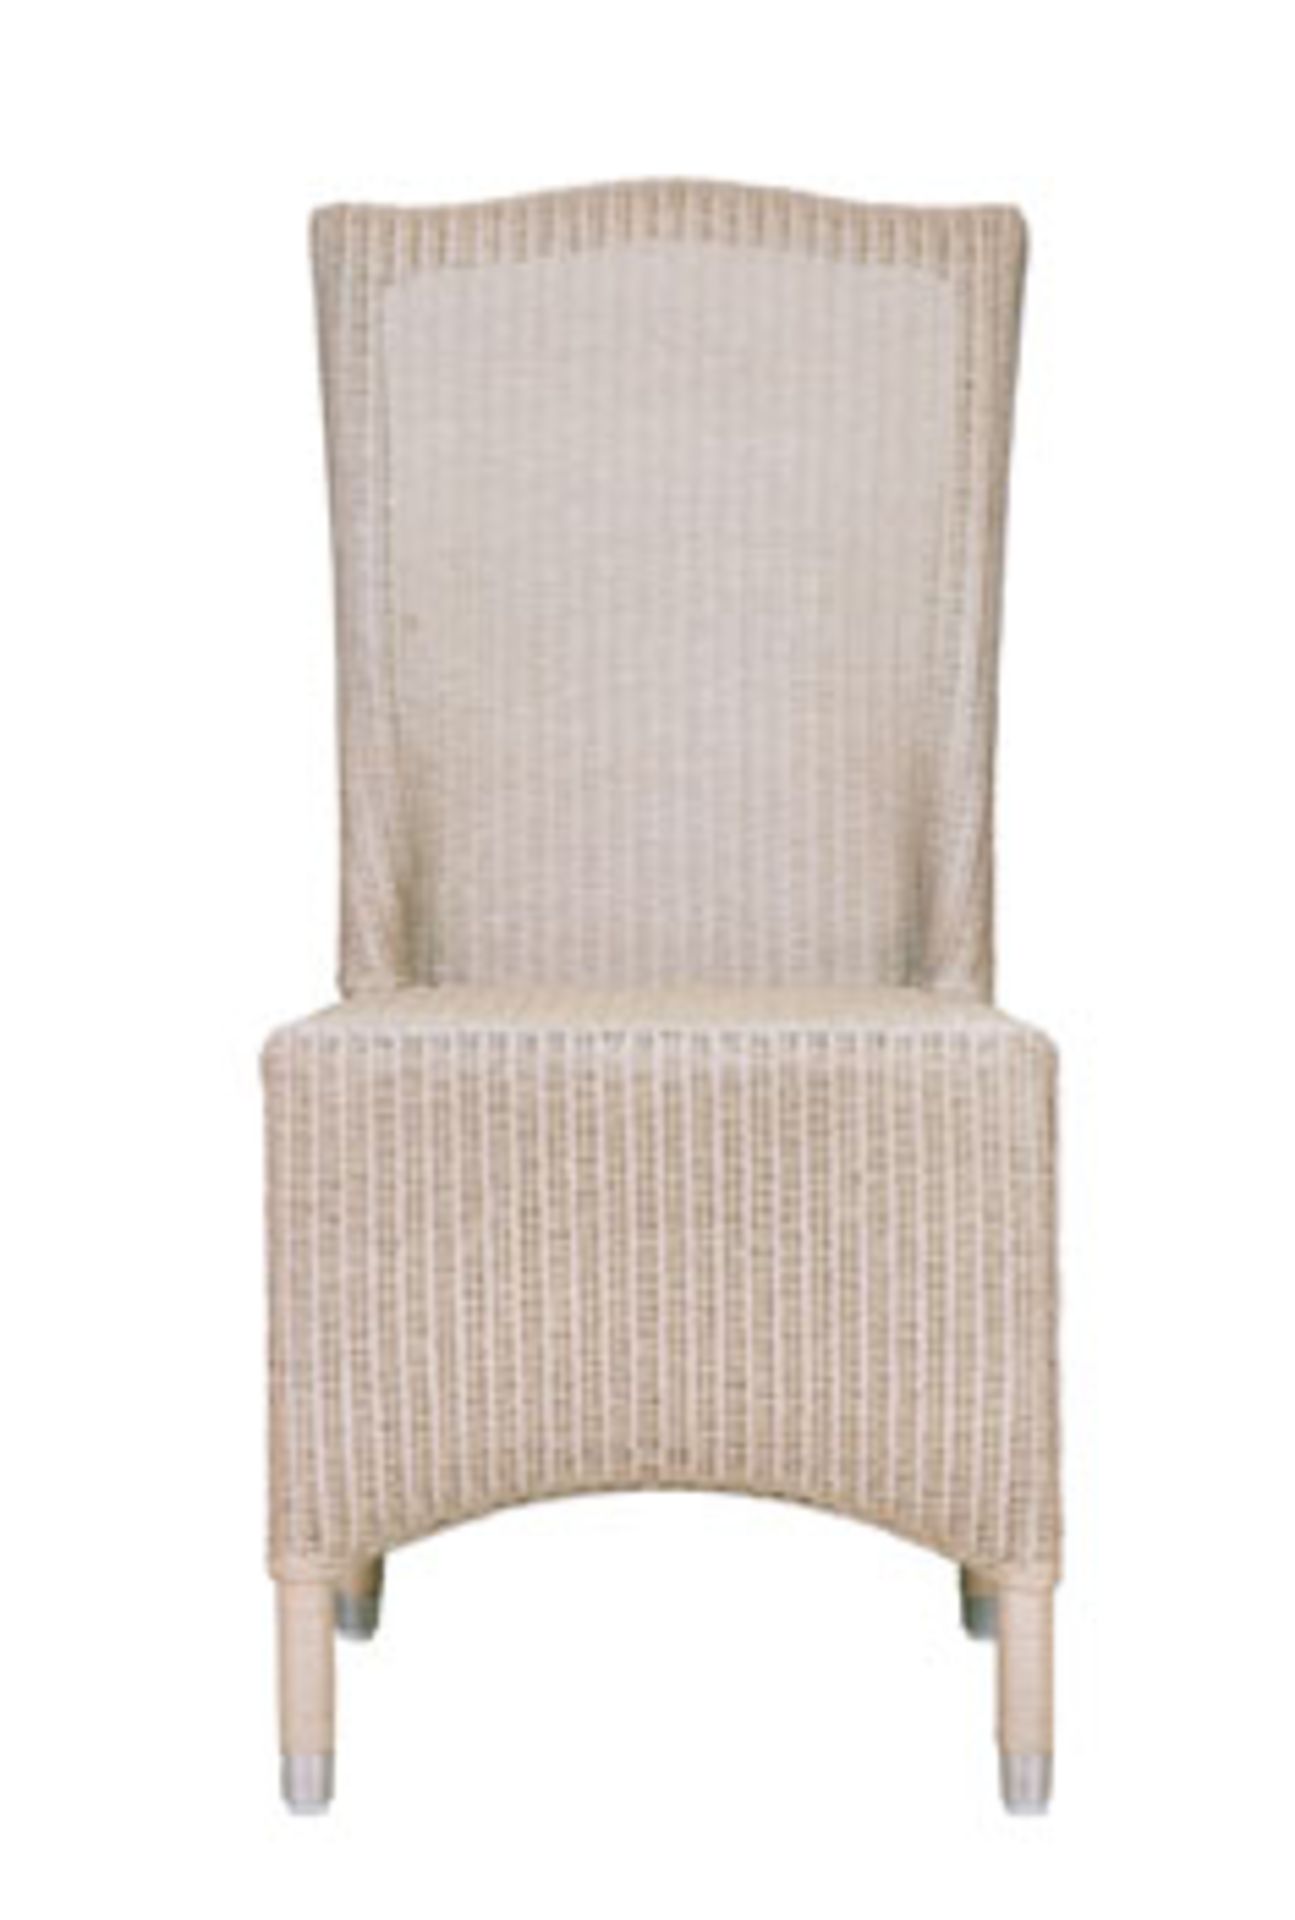 A Pair of Classic LLoyd Loom Chairs Canvas 40 x 60 x 100cm (Loc OAL01C) - Image 2 of 3